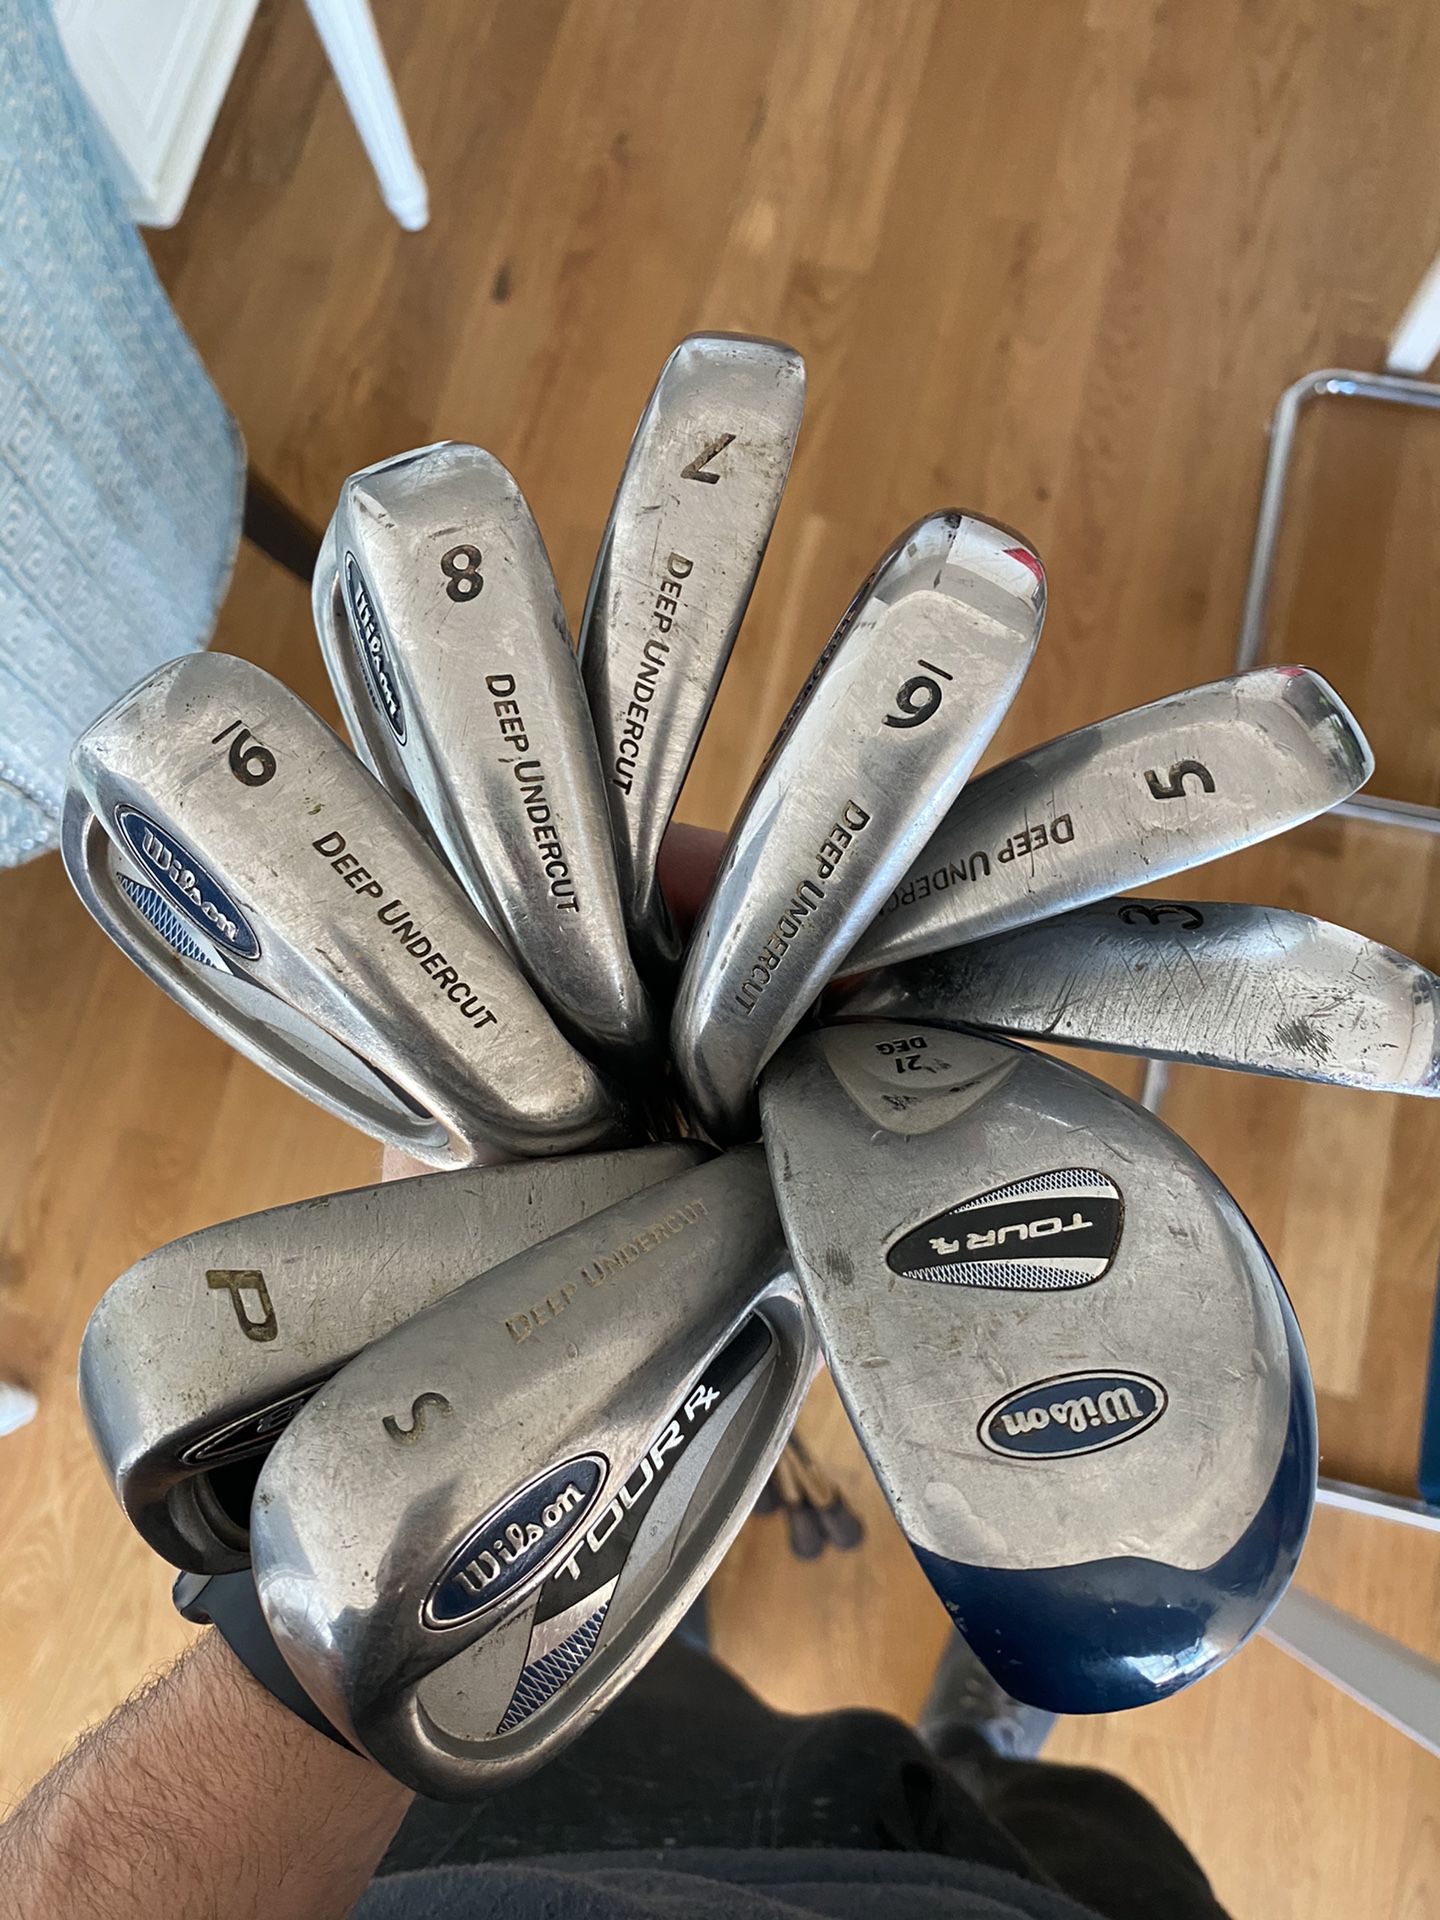 Golf Clubs - Full Set of Irons (3i - SW + 4H)